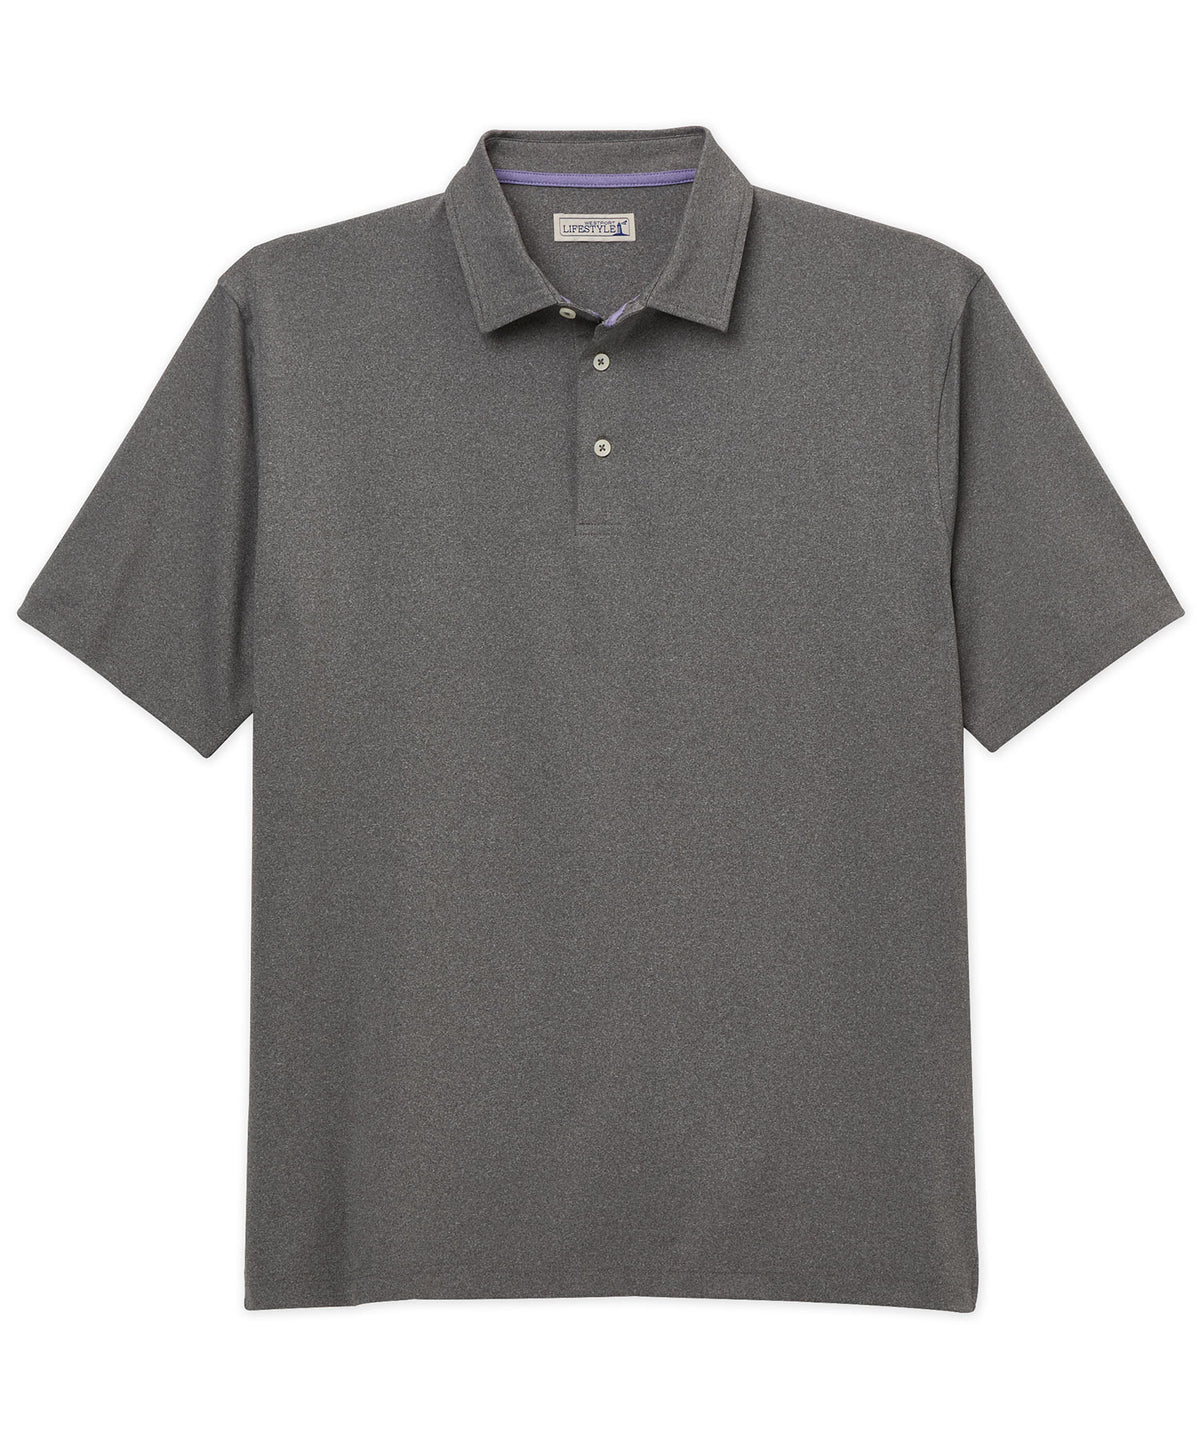 Westport Lifestyle Short Sleeve Performance Polo Knit Shirt